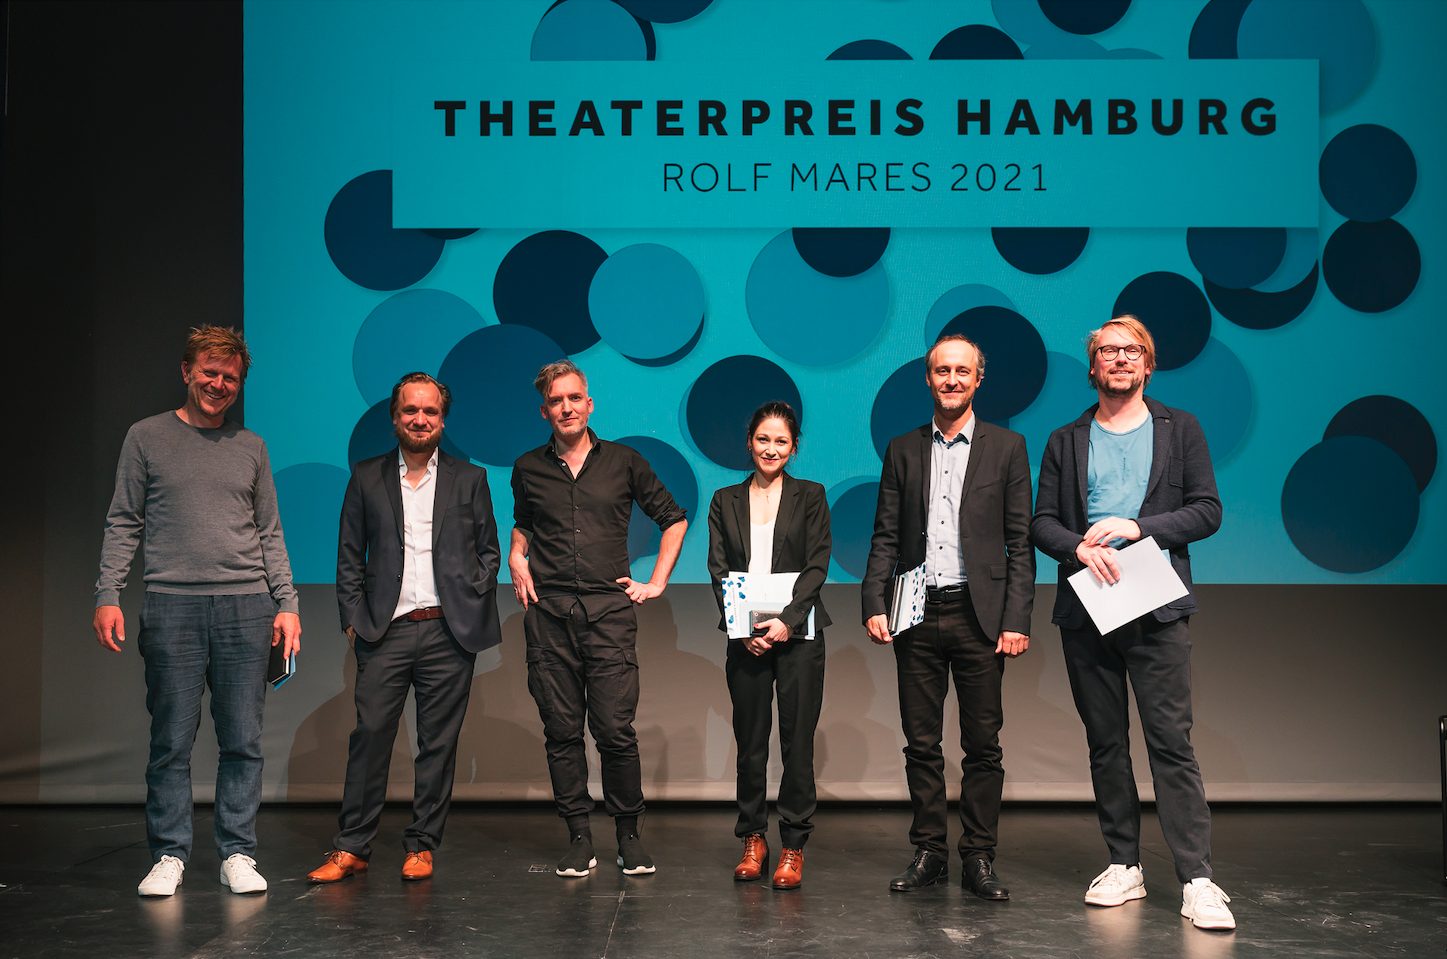 Theaterpreis Hamburg – Rolf Mares